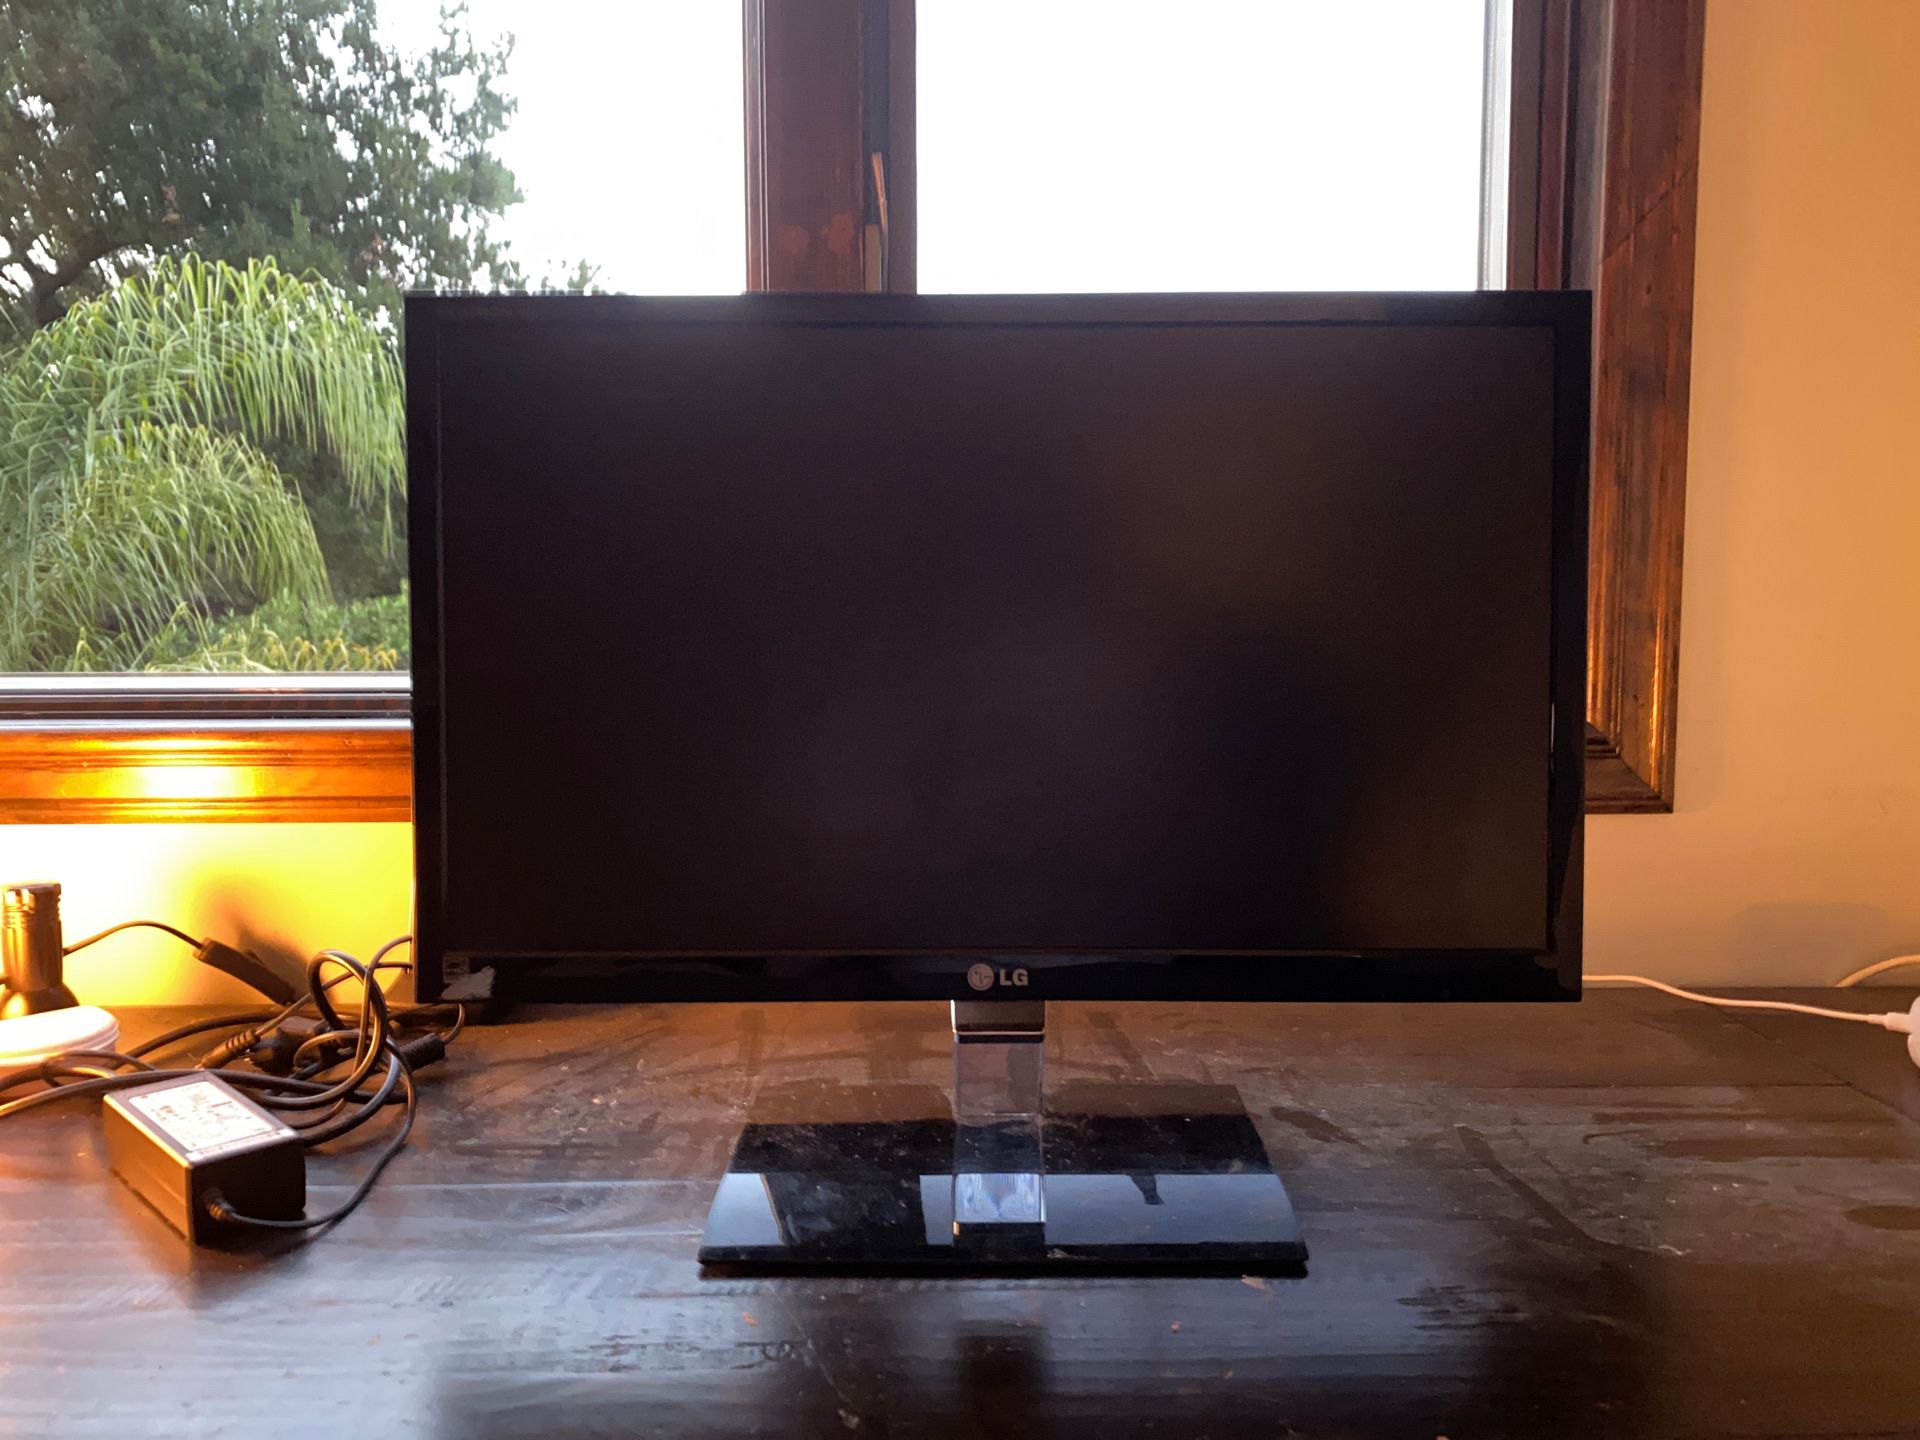 LG HD monitor